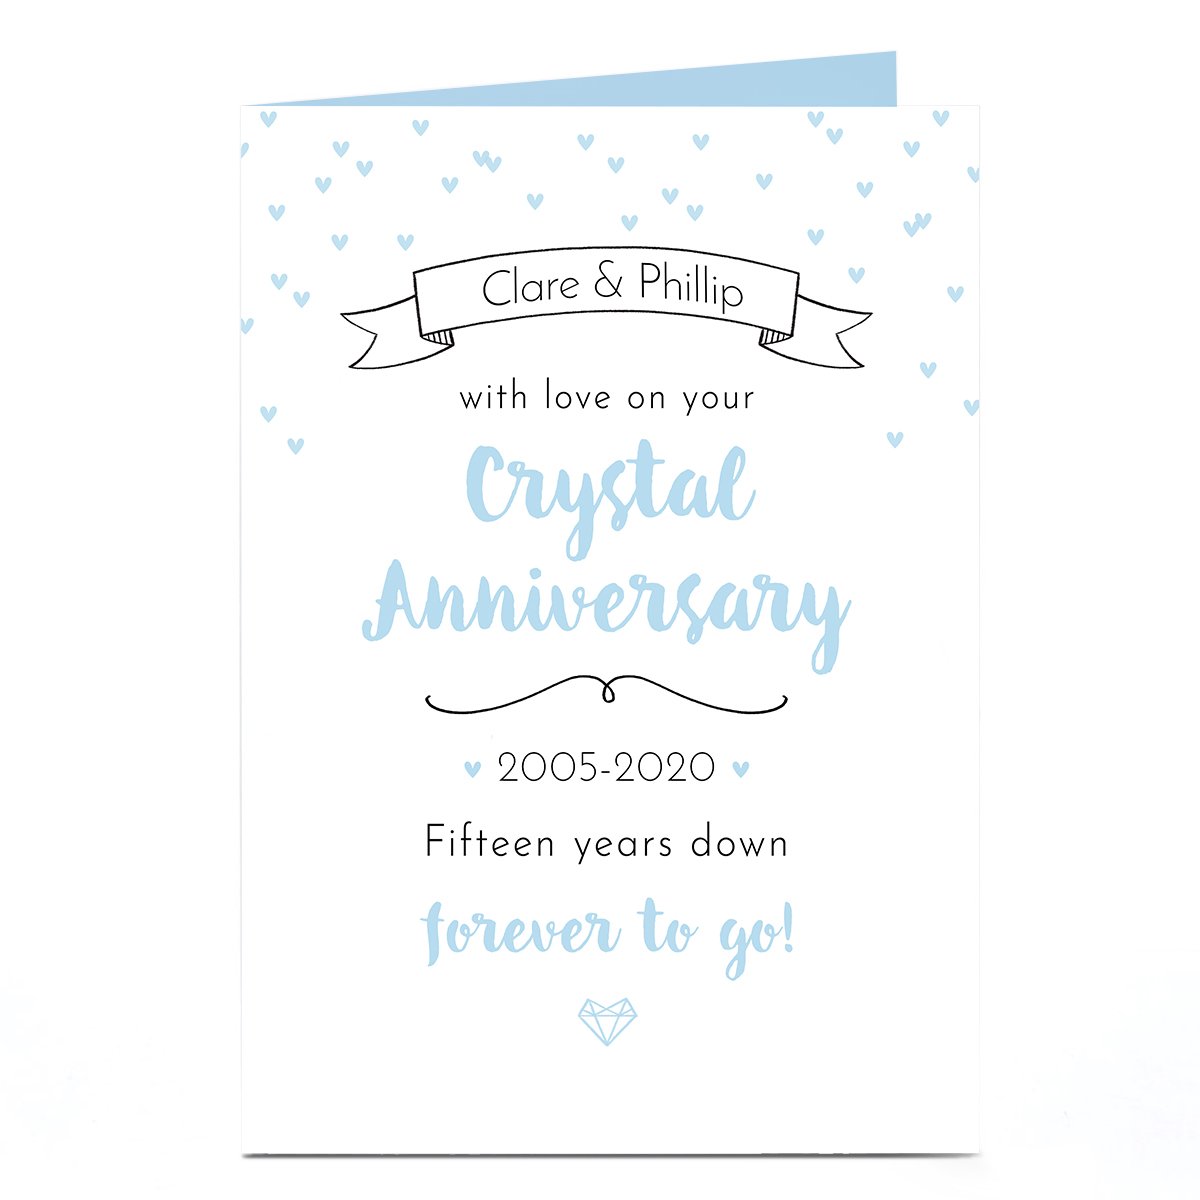 Personalised Anniversary Card - Crystal Anniversary 